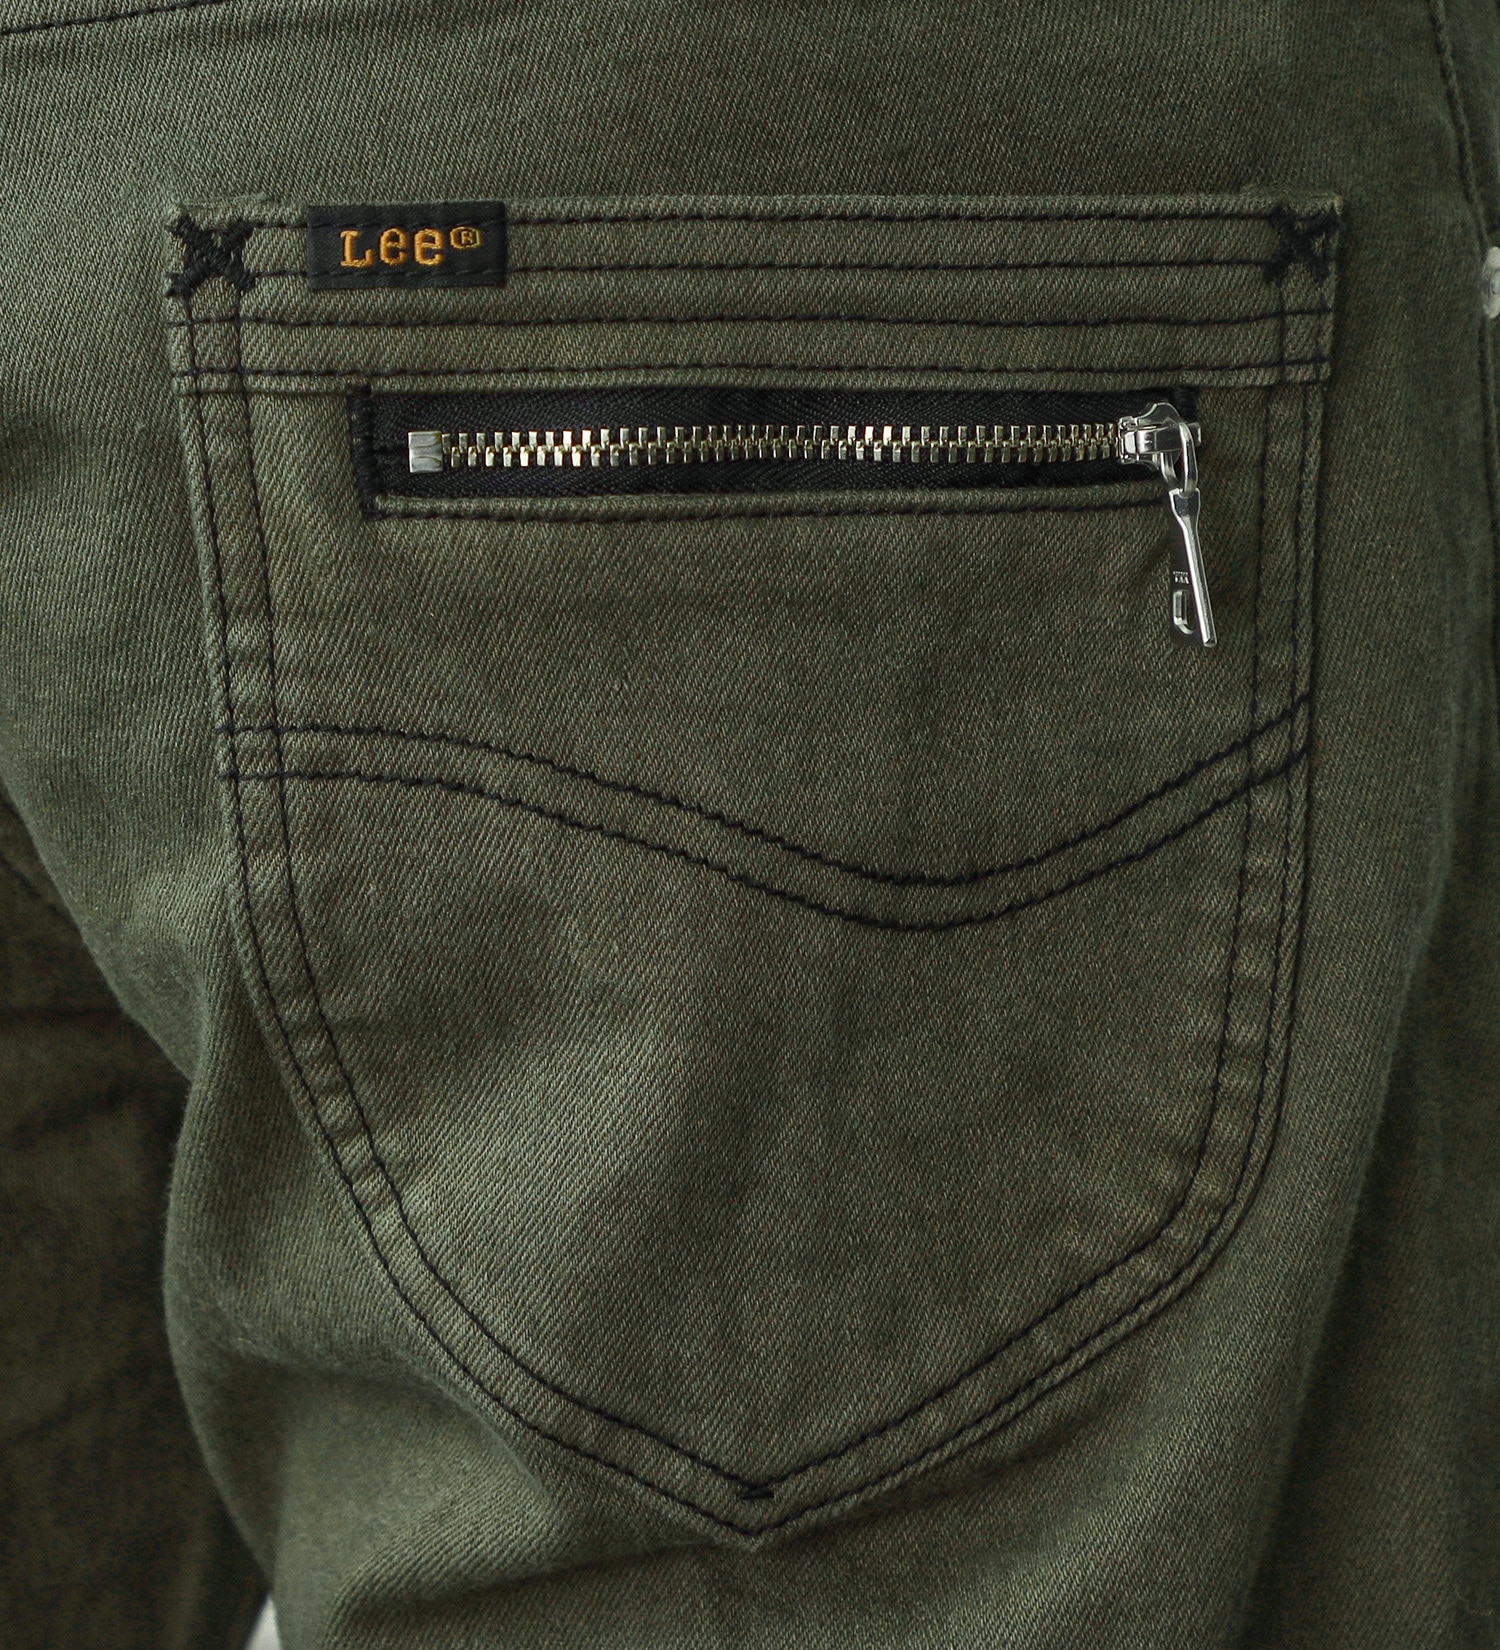 Lee(リー)のX-LINE ZIP NARROW|パンツ/パンツ/メンズ|オリーブ